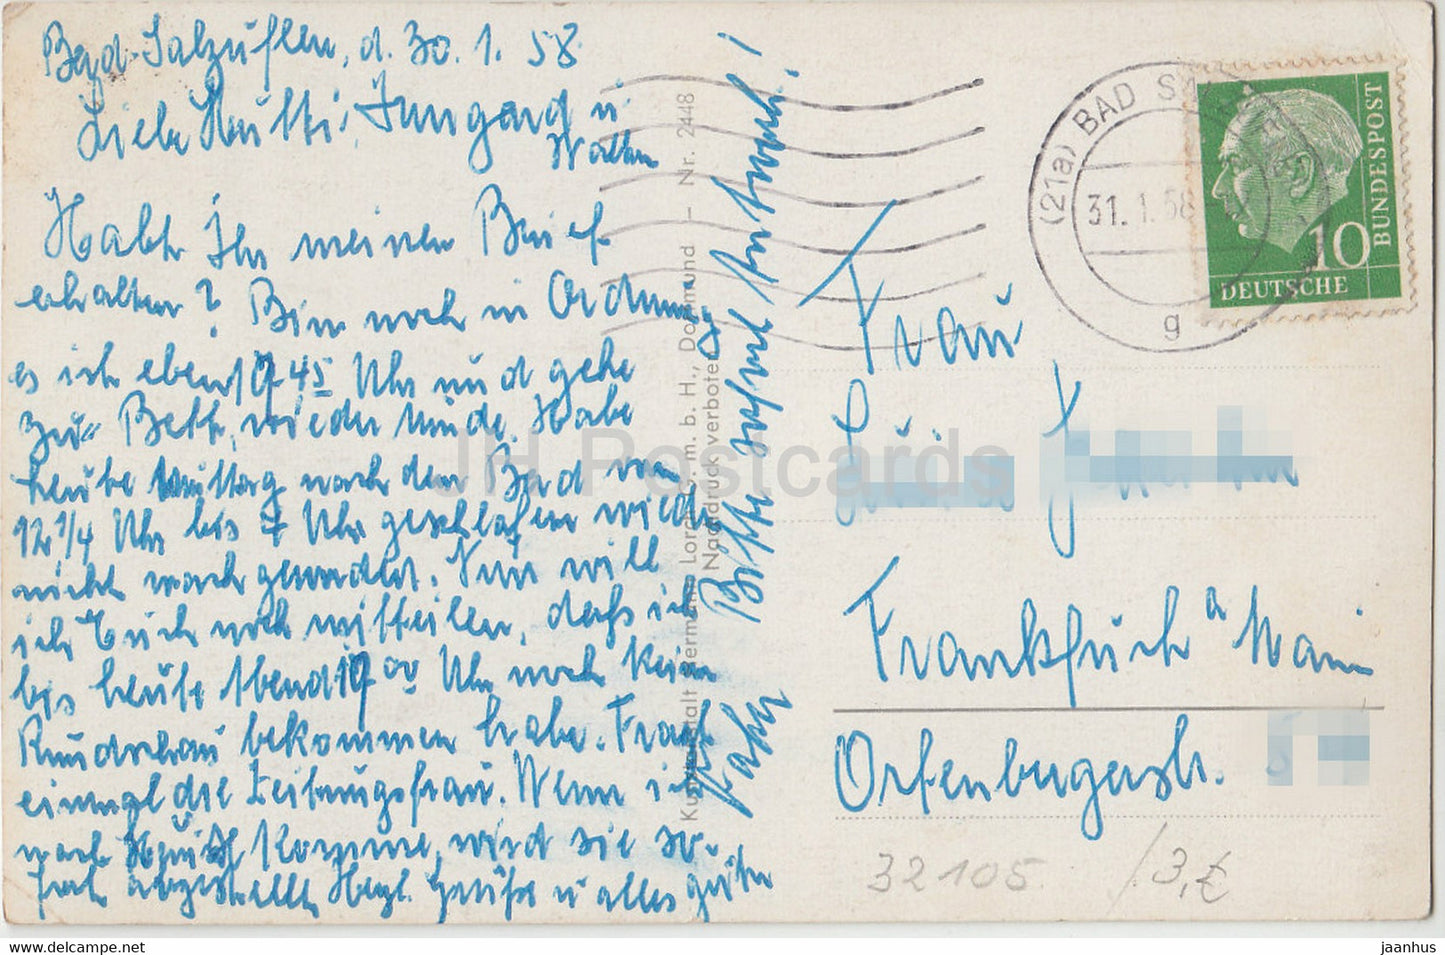 Bad Salzuflen - Kurhaus - Kurpark - Leuchtfontane - Leopoldsprudel - Schwaghow - old postcard - 1958 - Germany - used